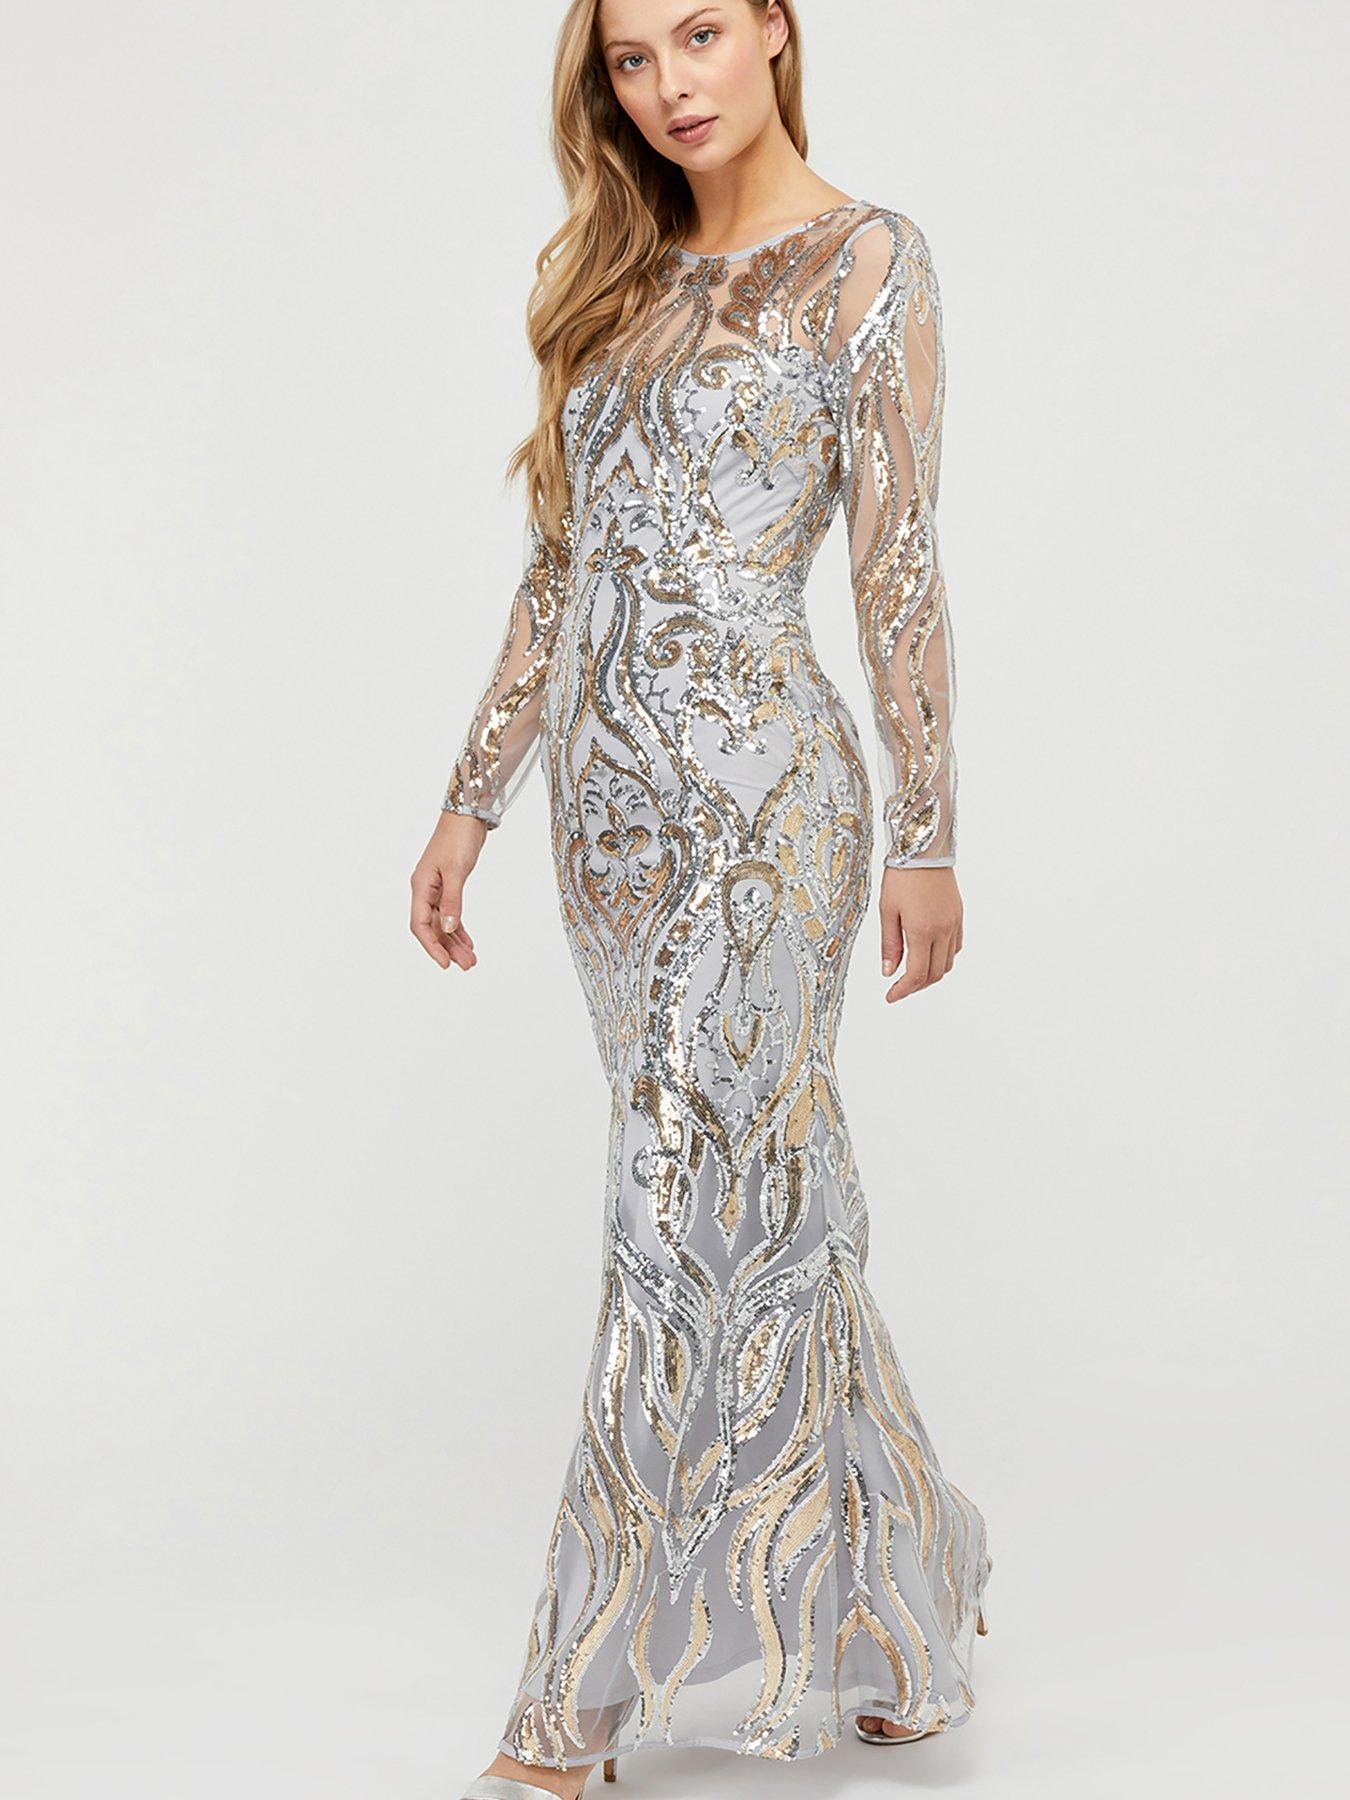 long sleeve sparkly dresses uk